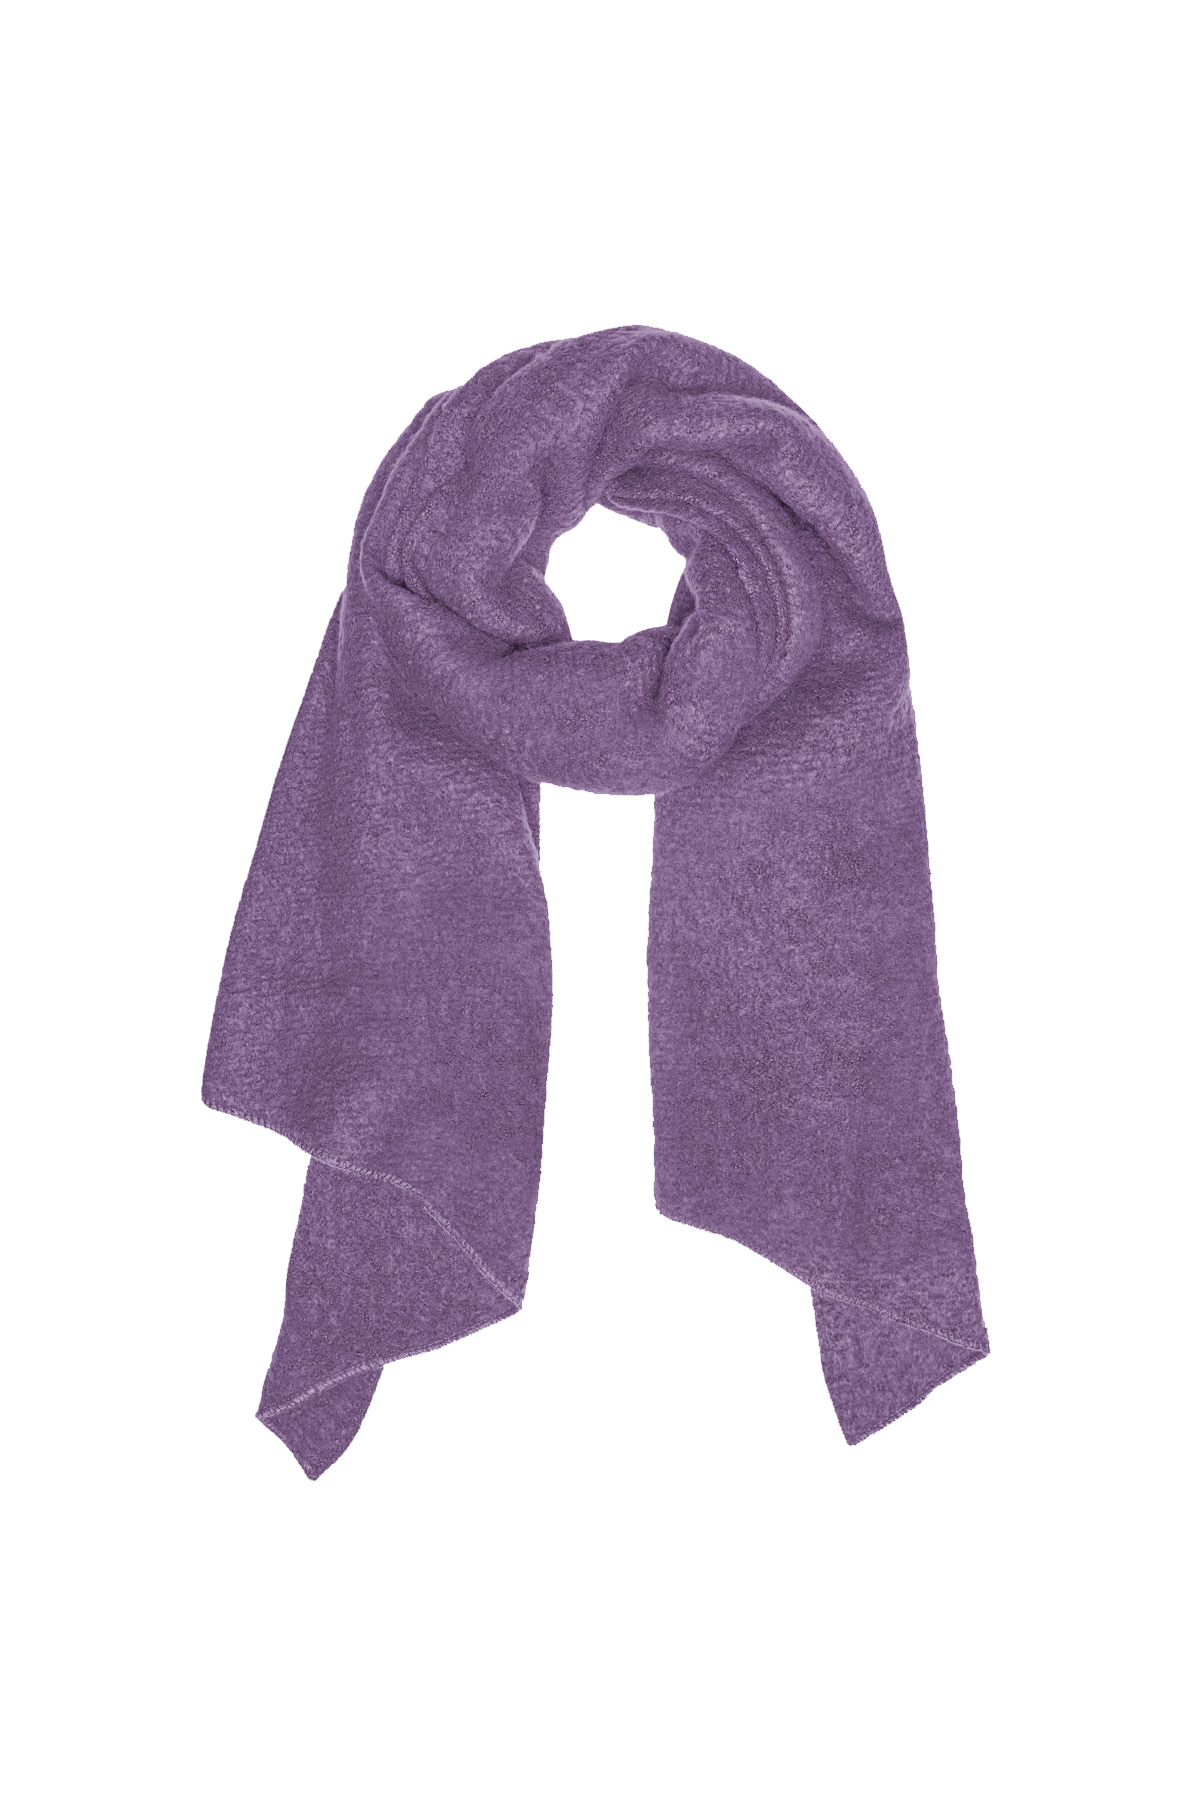 Single-colored winter scarf - purple 